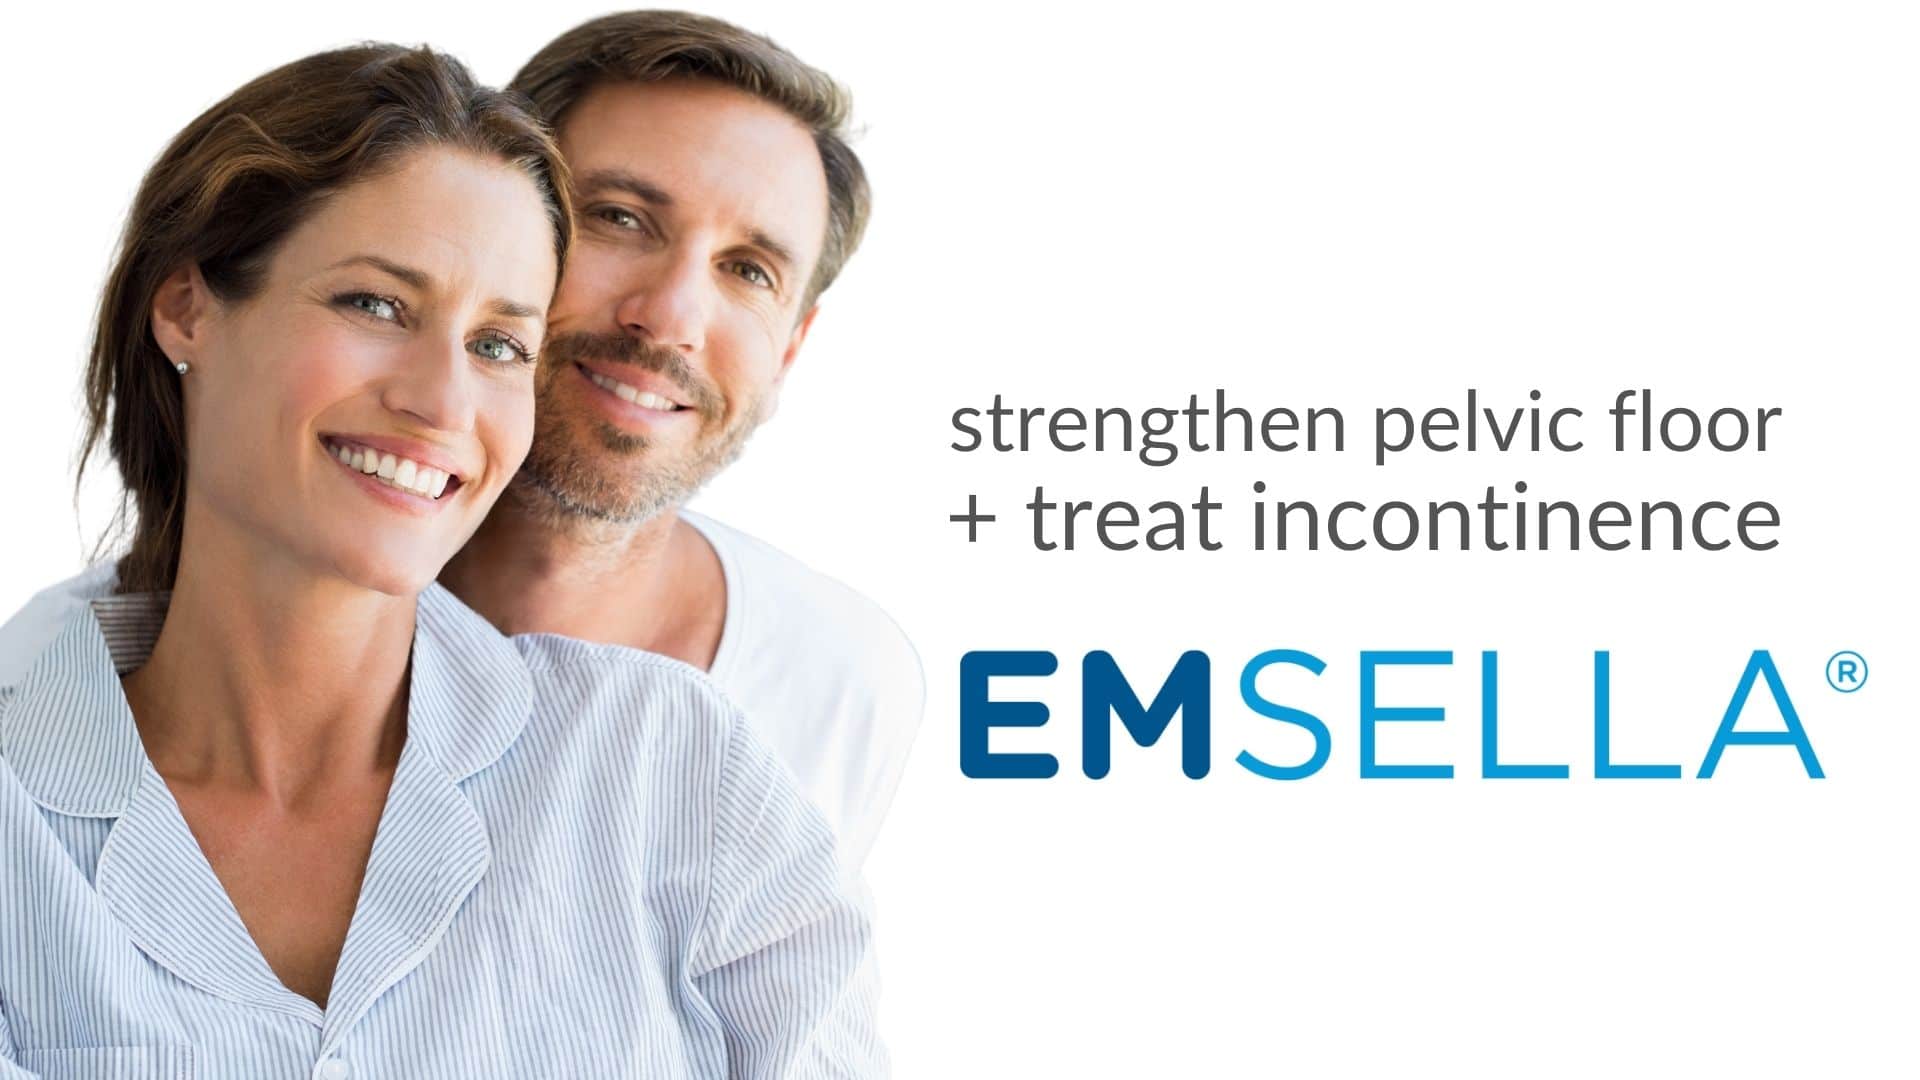 Beautiful smiling couple promoting Emsella treatment